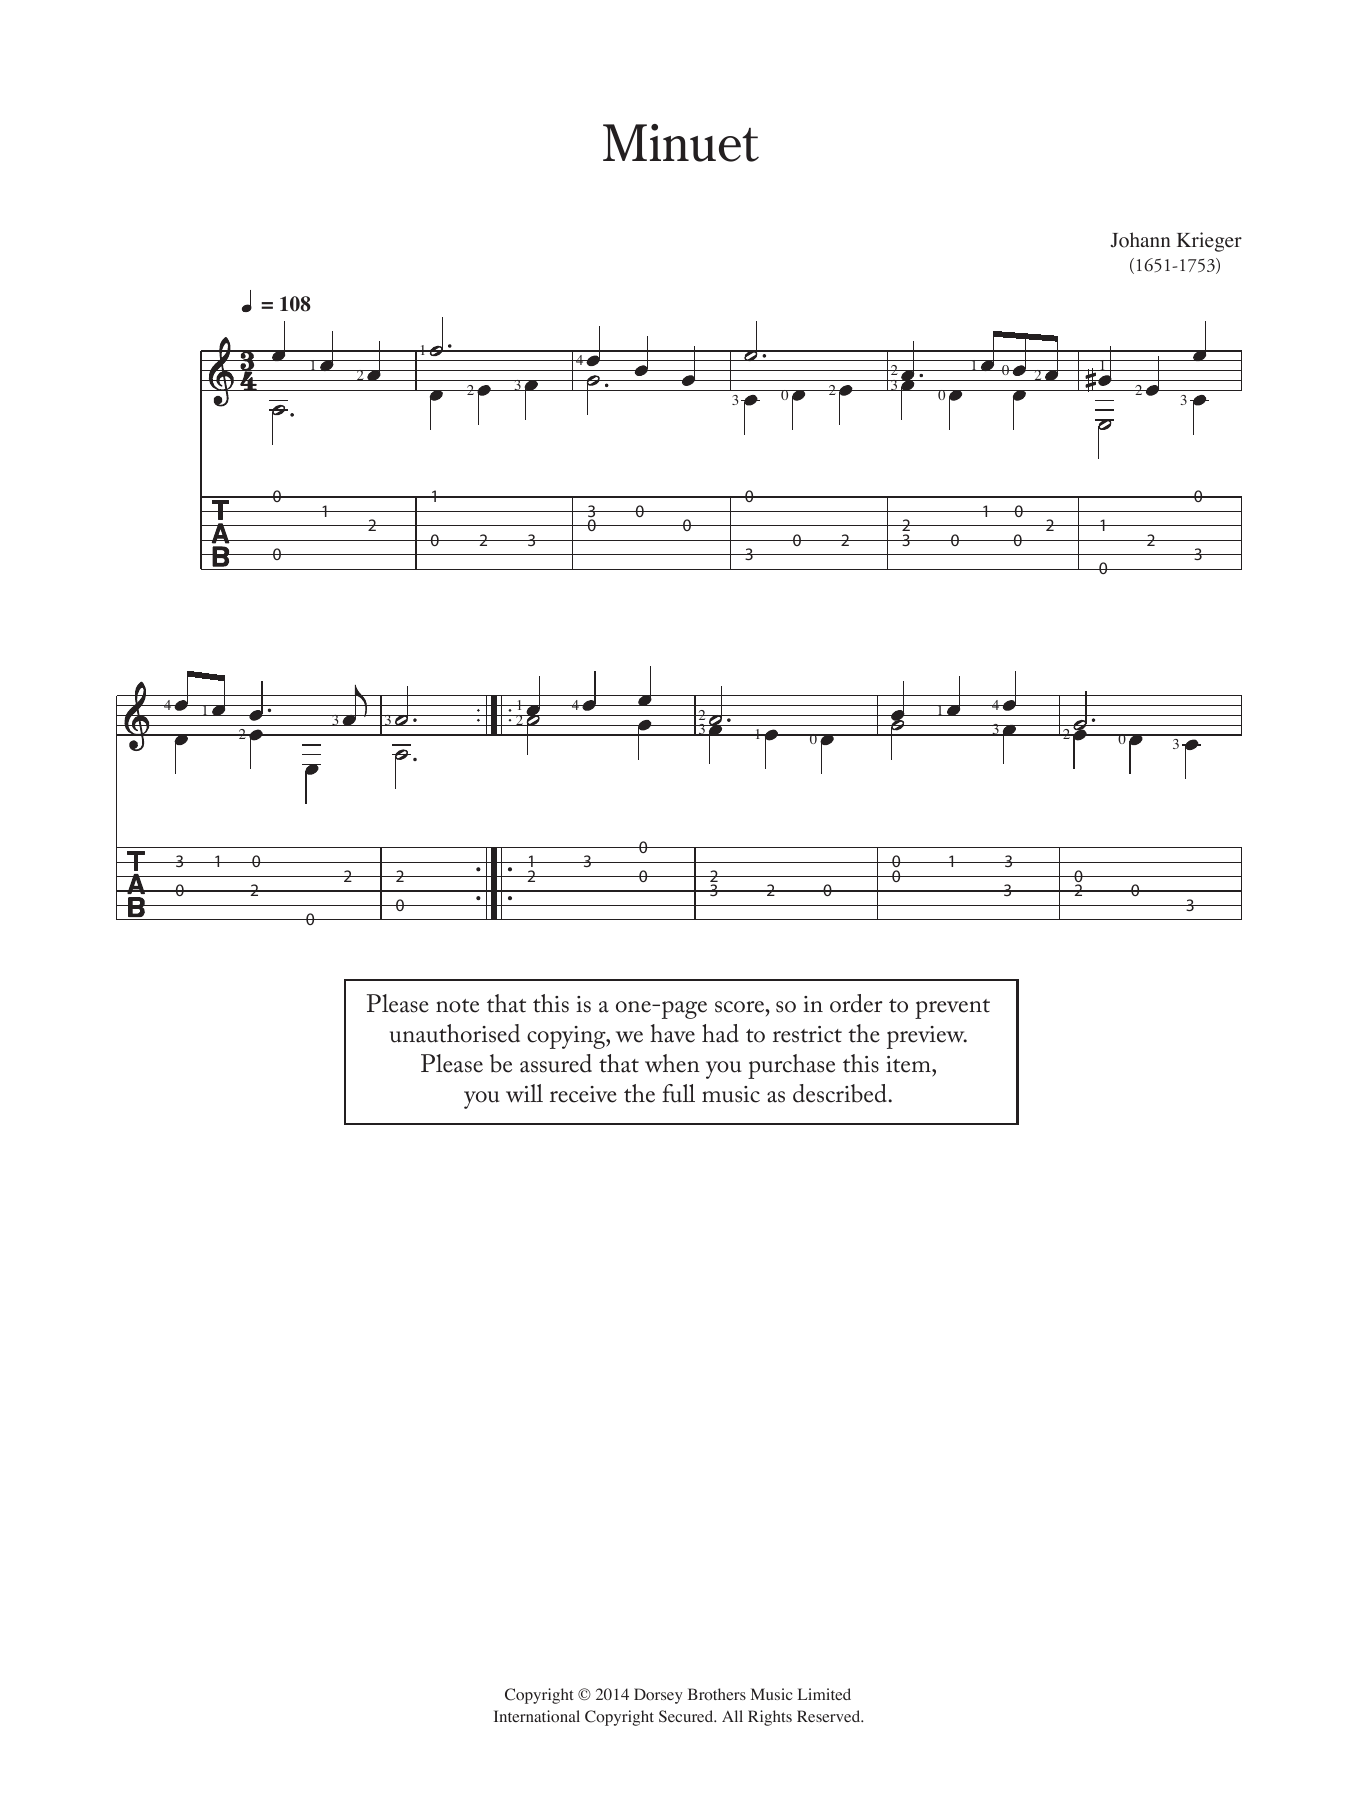 Johann Philipp Krieger Minuet Sheet Music Notes & Chords for Guitar - Download or Print PDF